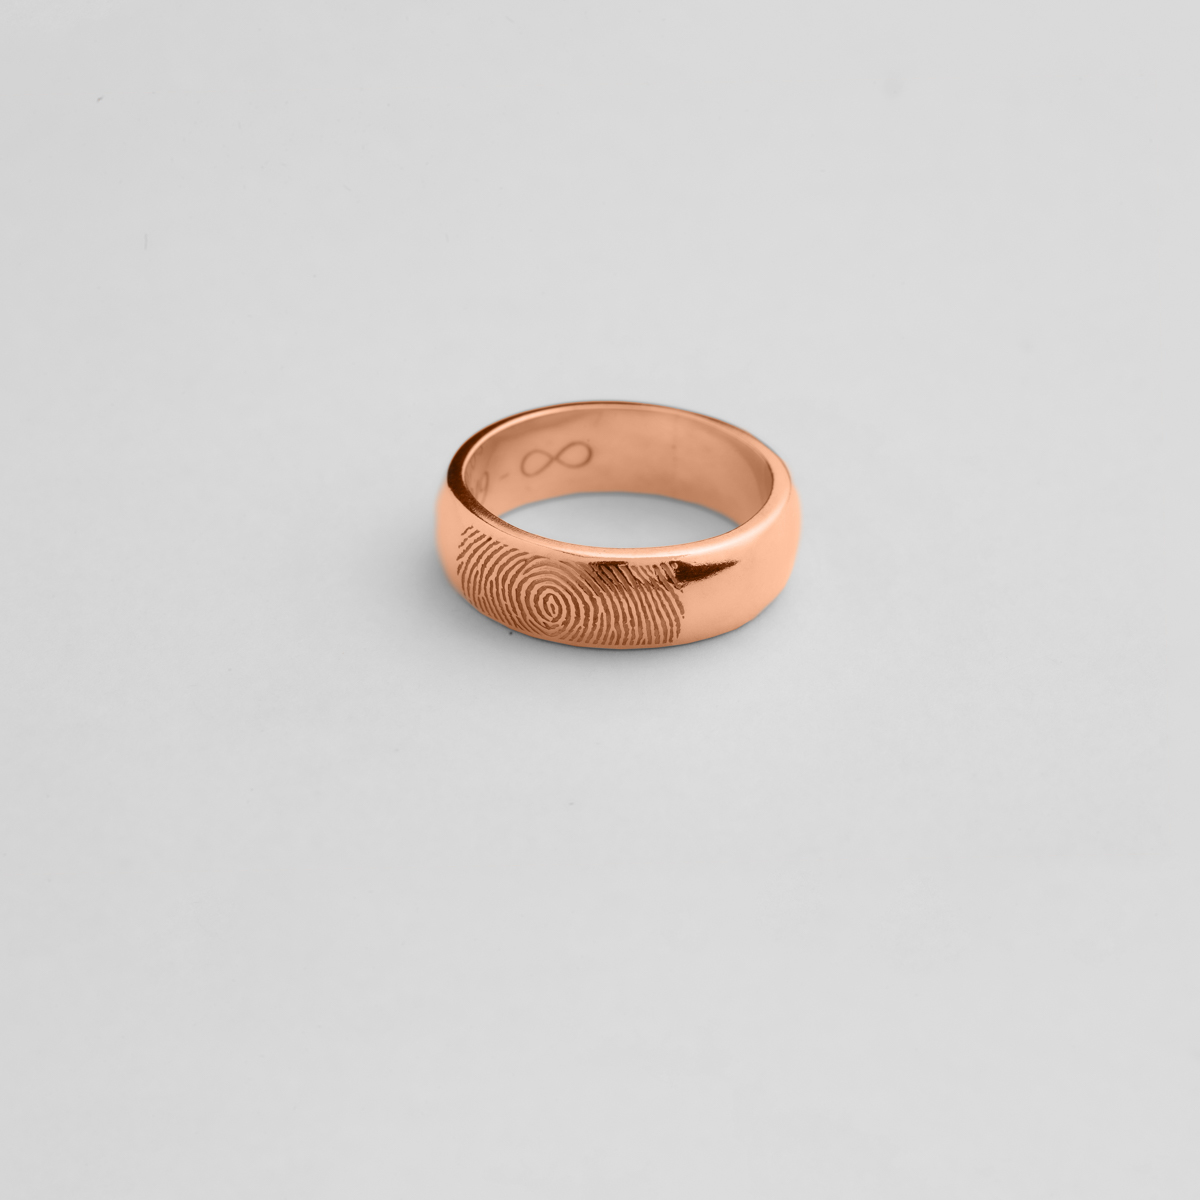 Decorative Solid 14k Gold Women's Fingerprint Ring, 14K Gold Women's  Fingerprint Jewelry